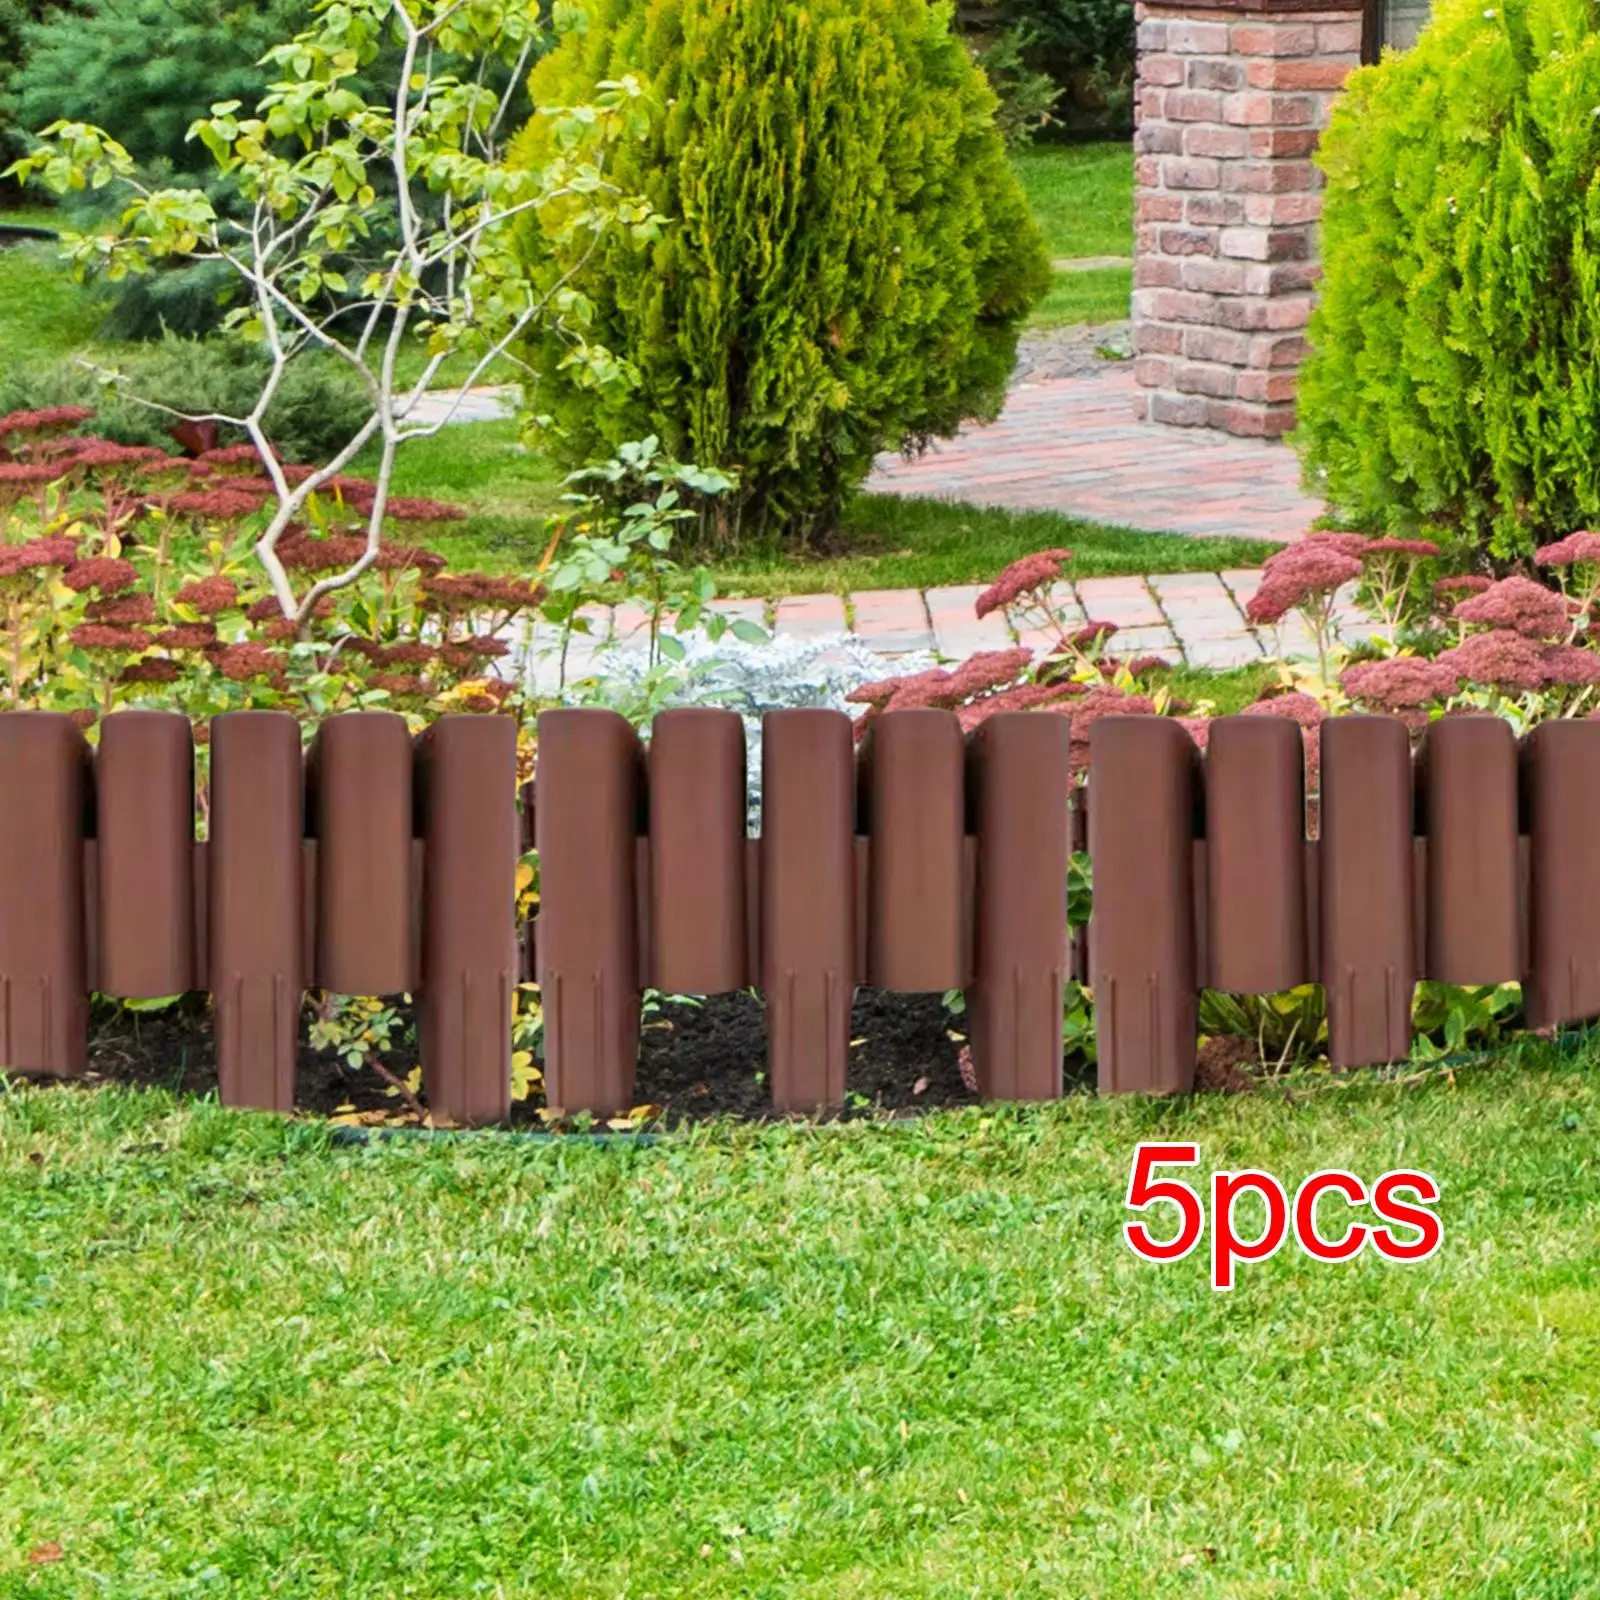 5Pcs Garden Edging Border Detachable Durable Decorative Yard Plant Garden Fencing for Landscaping Path Garden Flower Lawn Edge